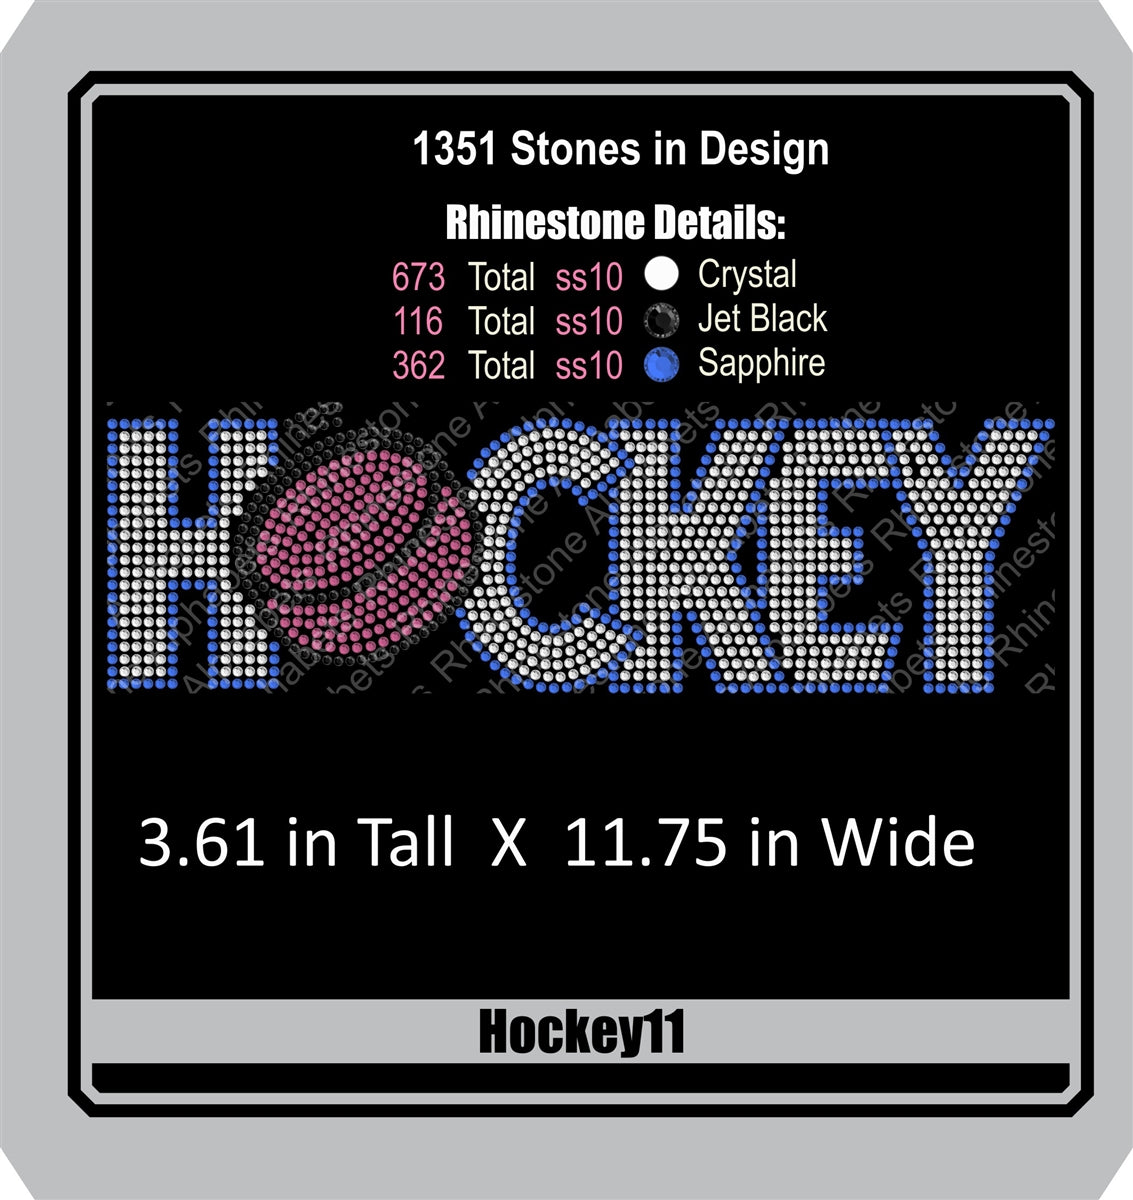 Hockey 11 ,TTF Rhinestone Fonts & Rhinestone Designs